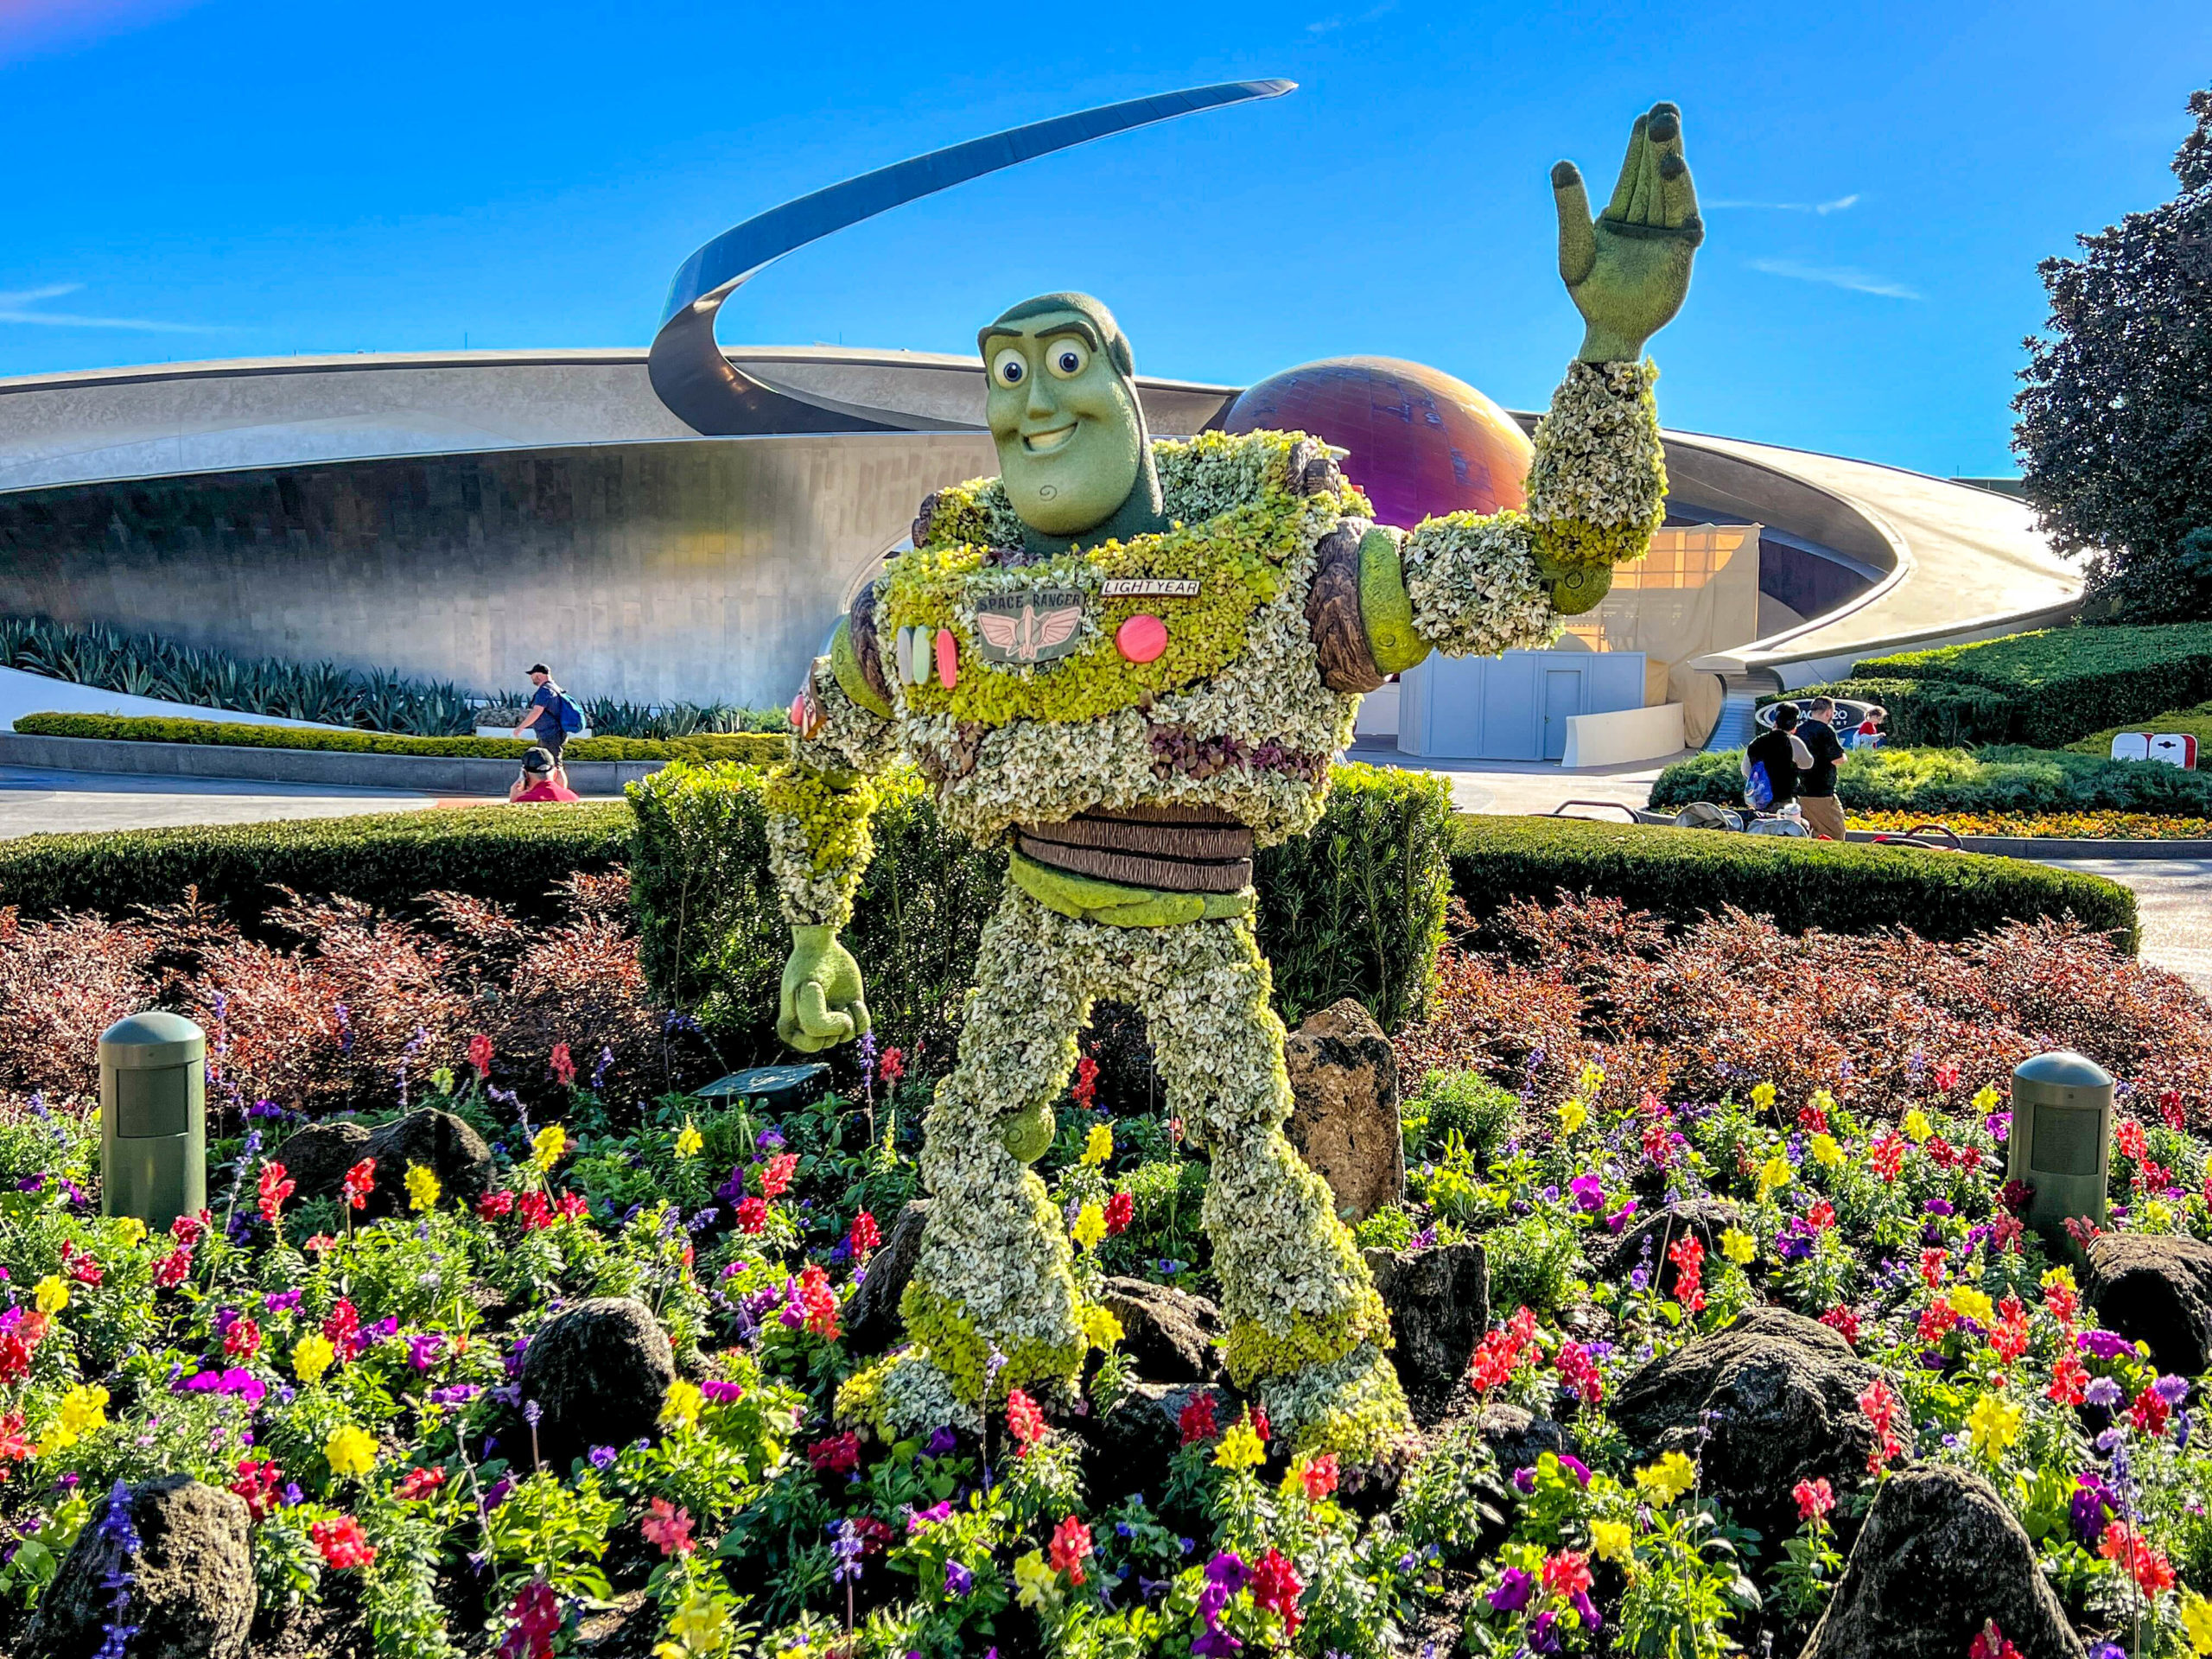 Buzz Lightyear topiary